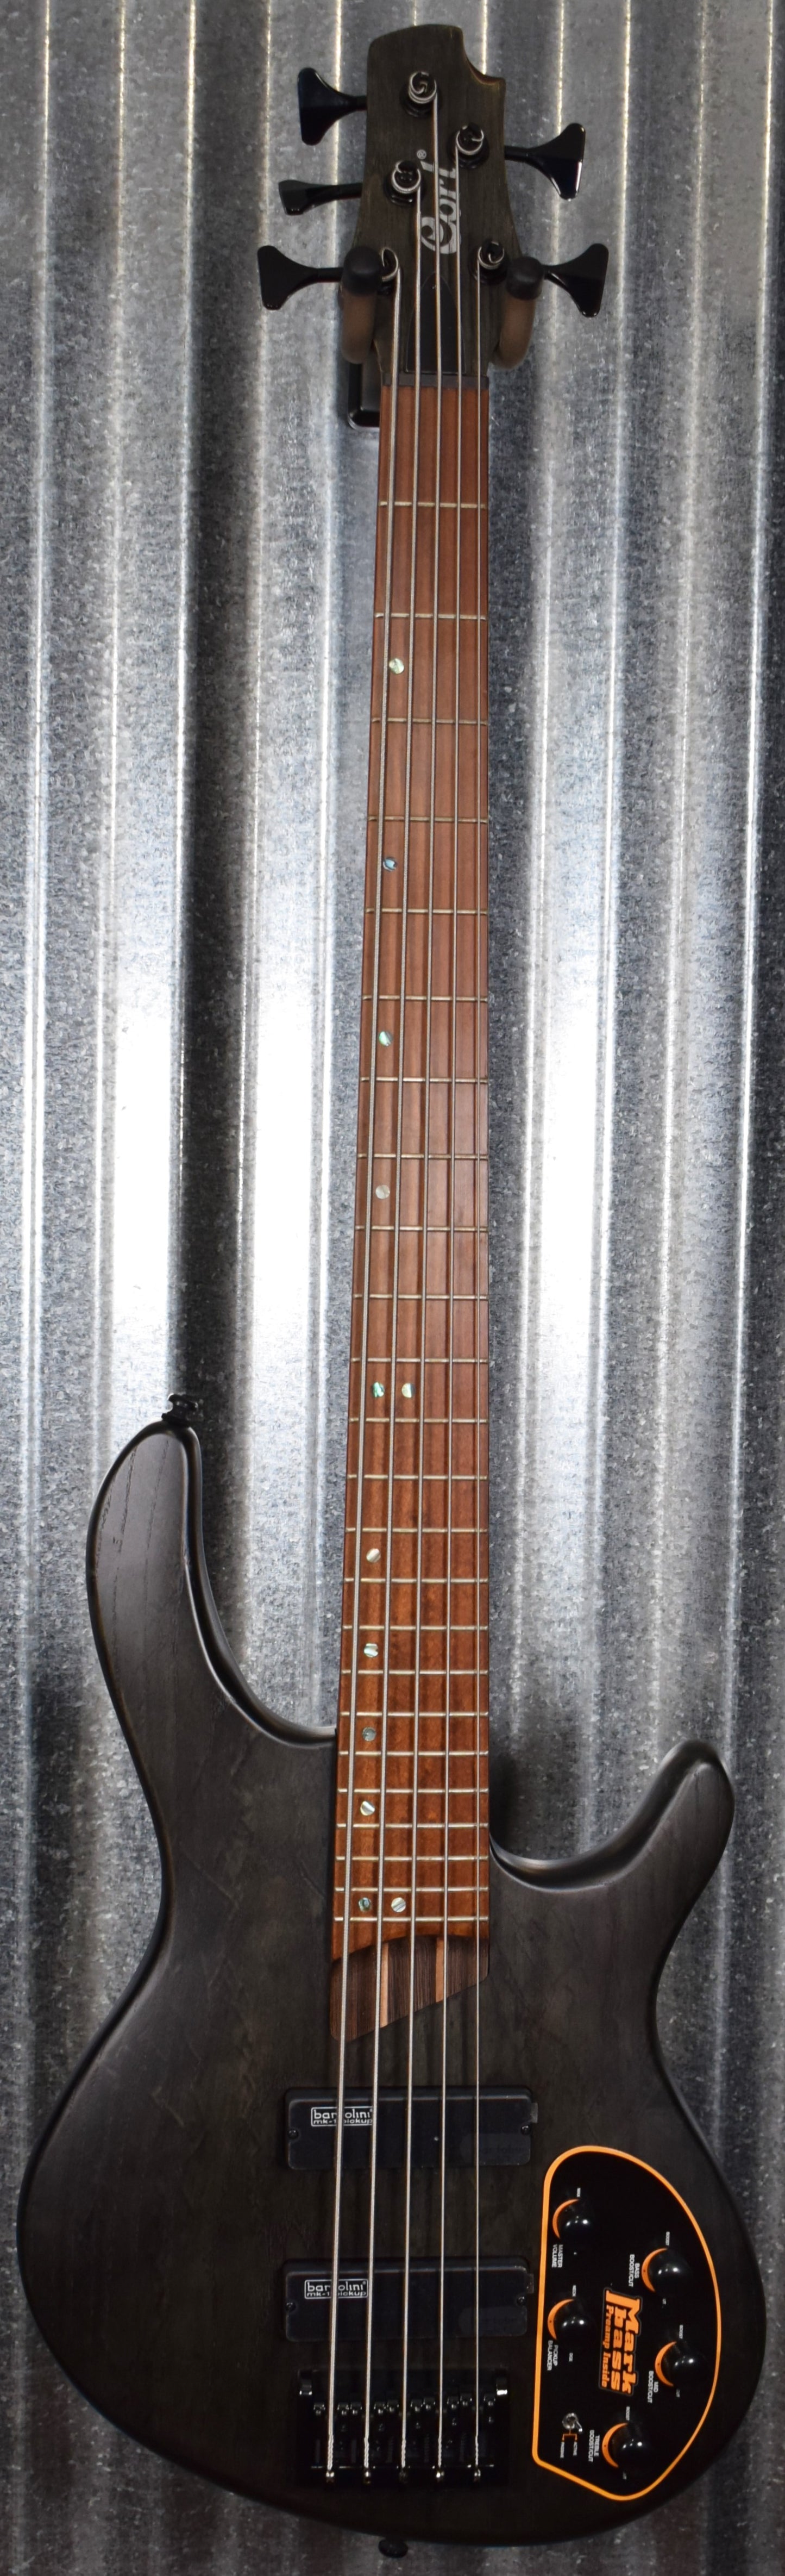 Cort Artisan B5 Plus AS RM 5 String Bass Roasted Neck Open Pore Trans Black #7619